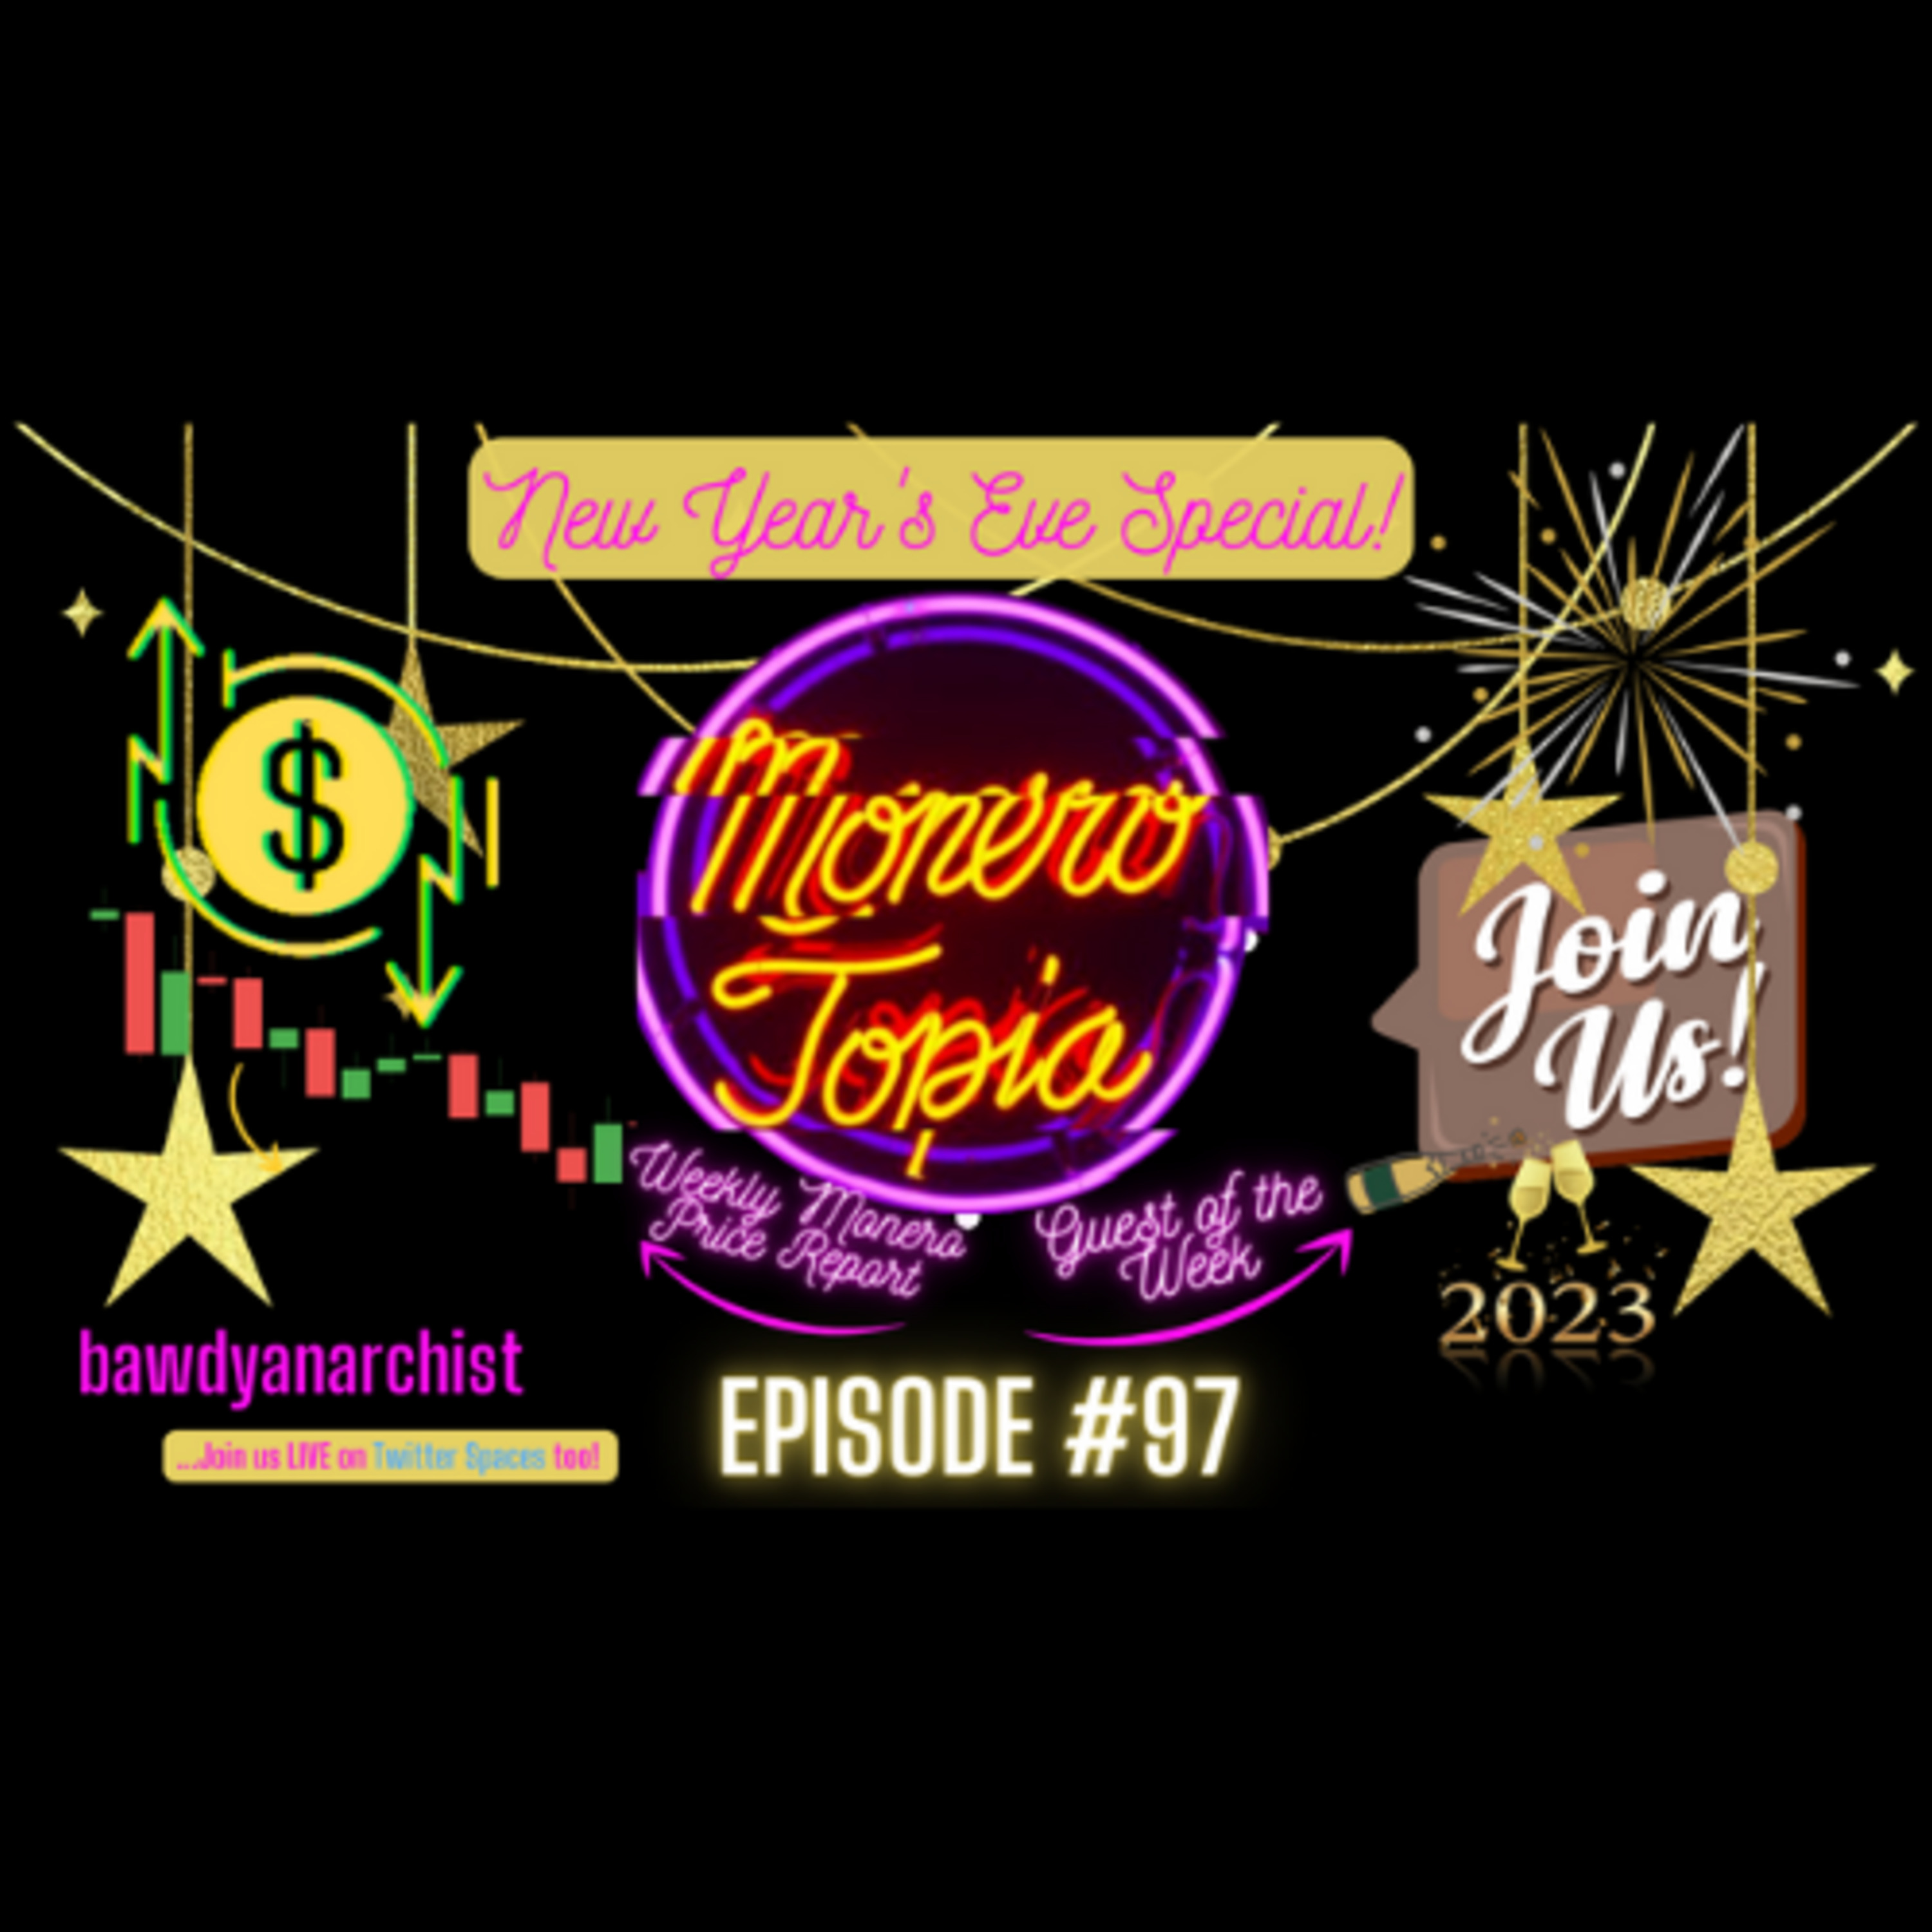 New Year’s Eve Monerotopia Celebration! Monero Price Report w/ Bawdy, XMR news & MORE! EPI #97